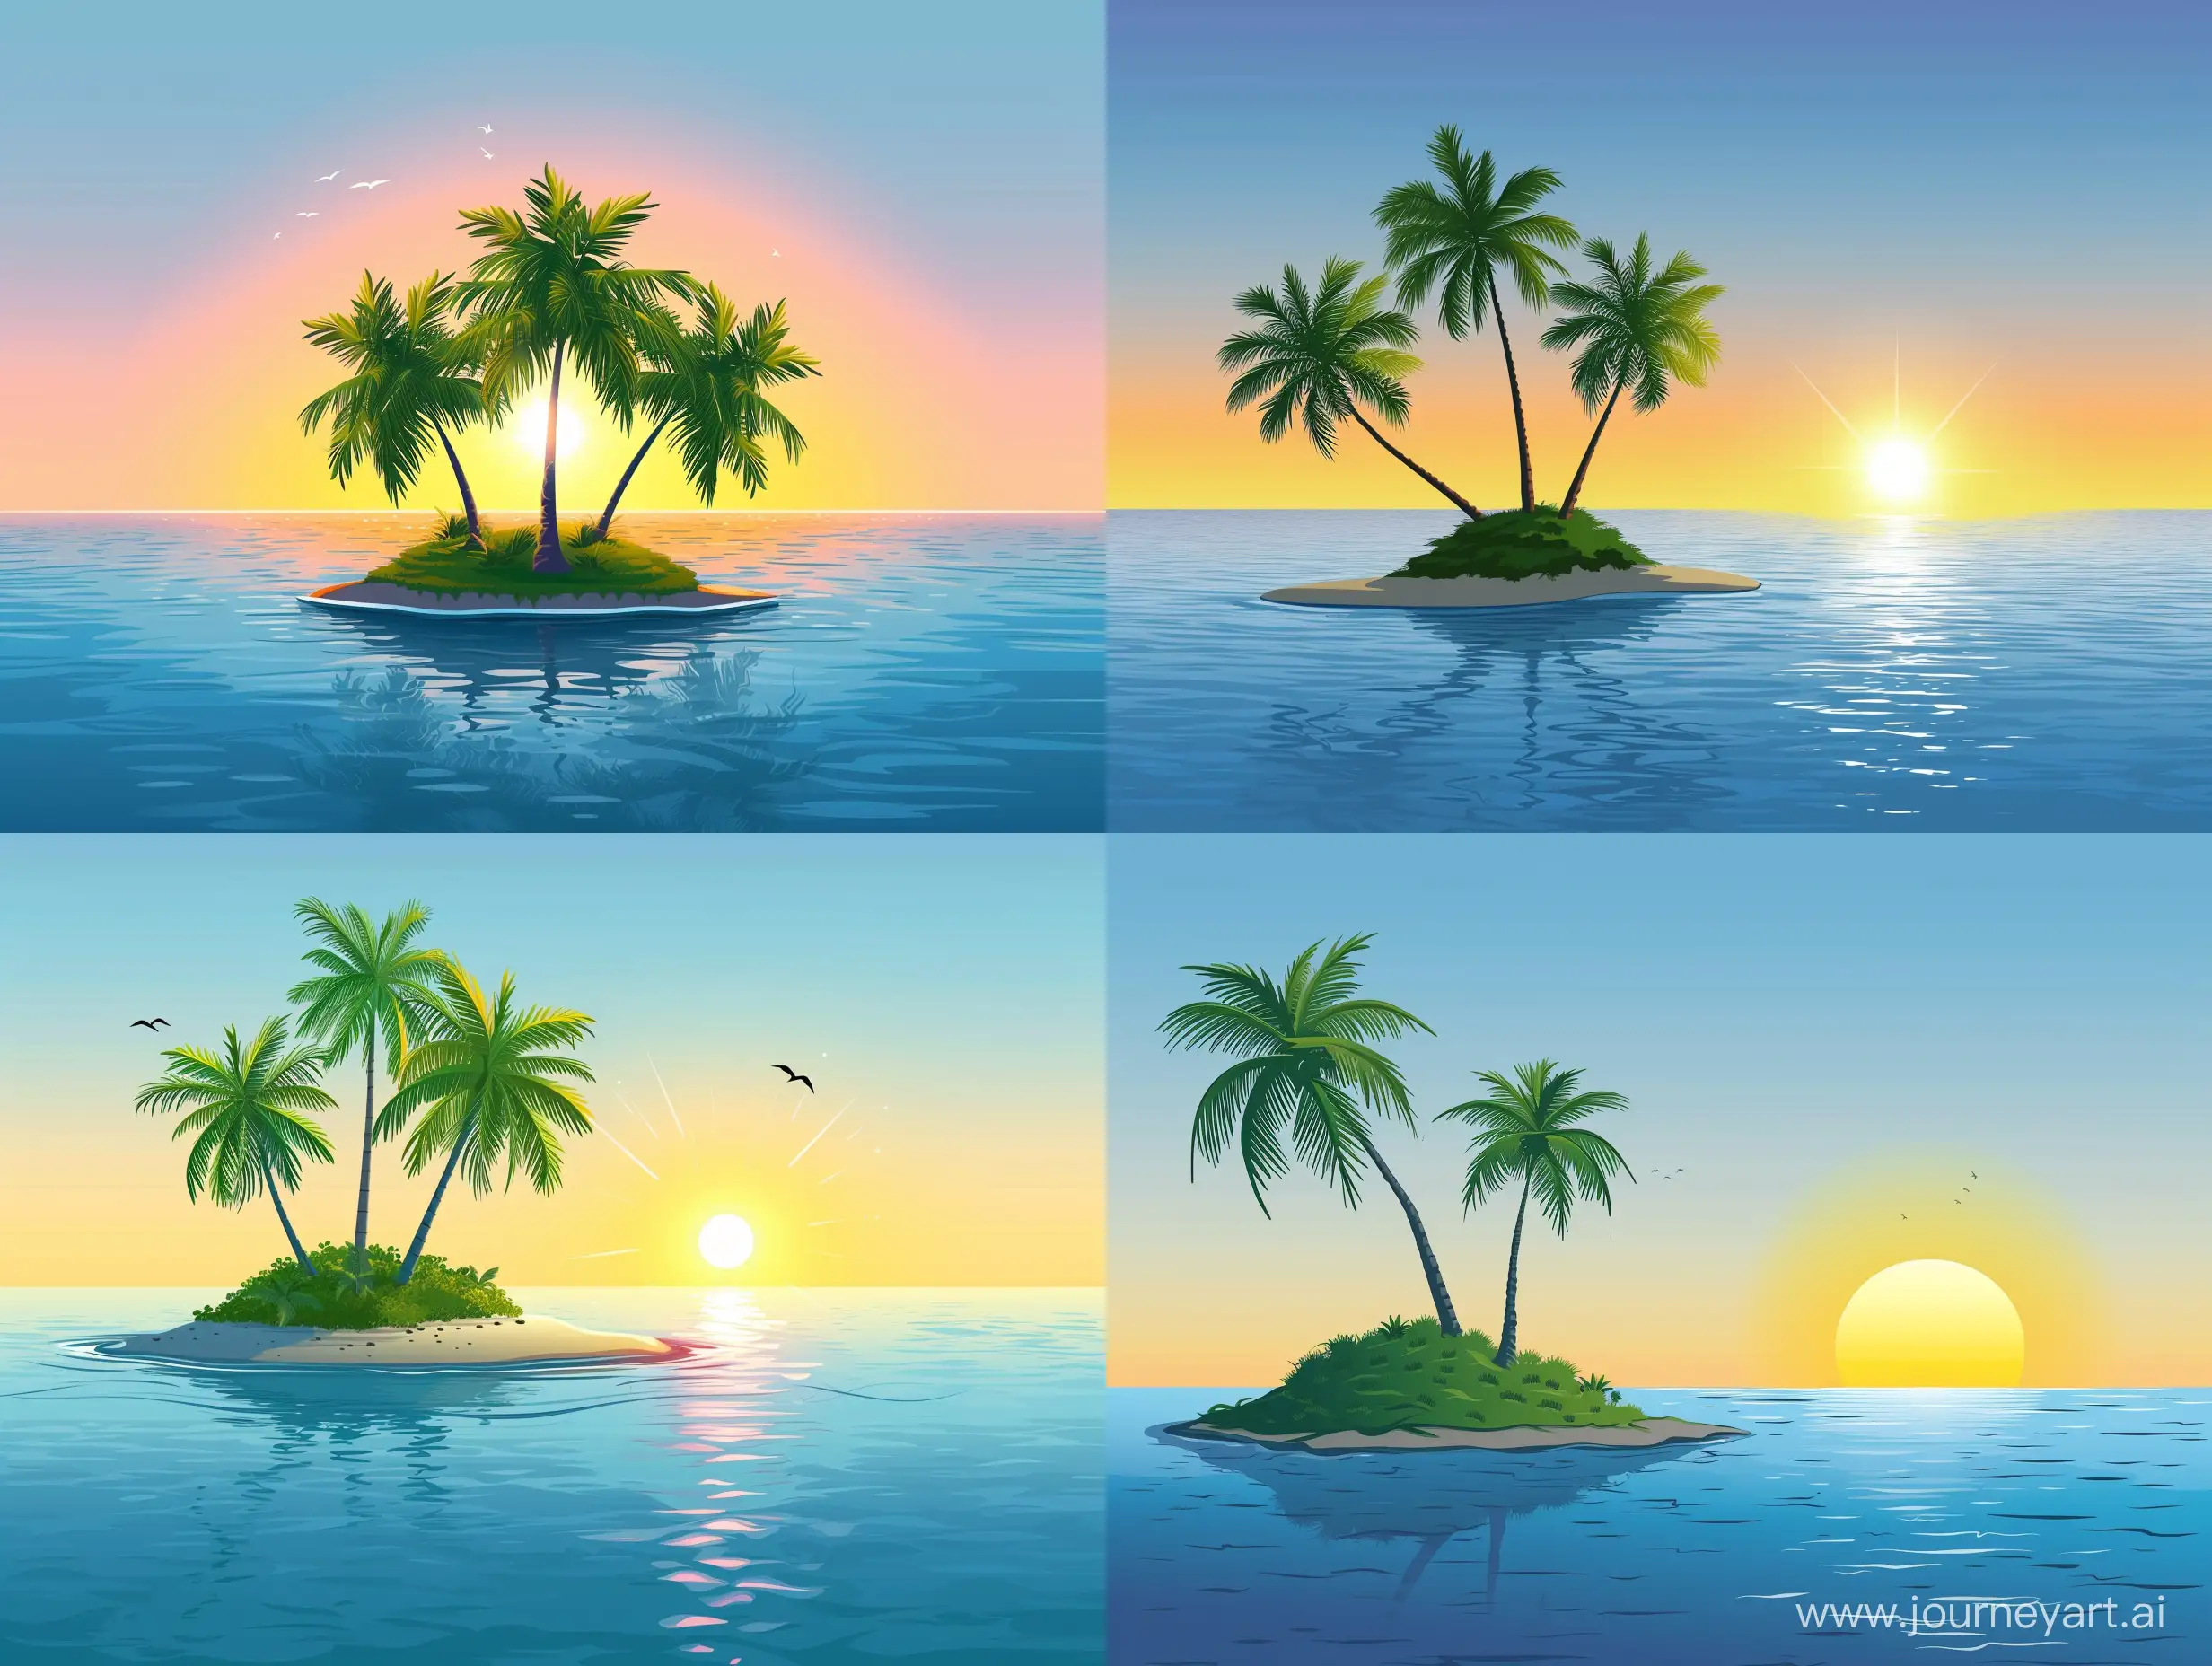 Tropical-Sunrise-on-a-Serene-Island-with-Coconut-Palms